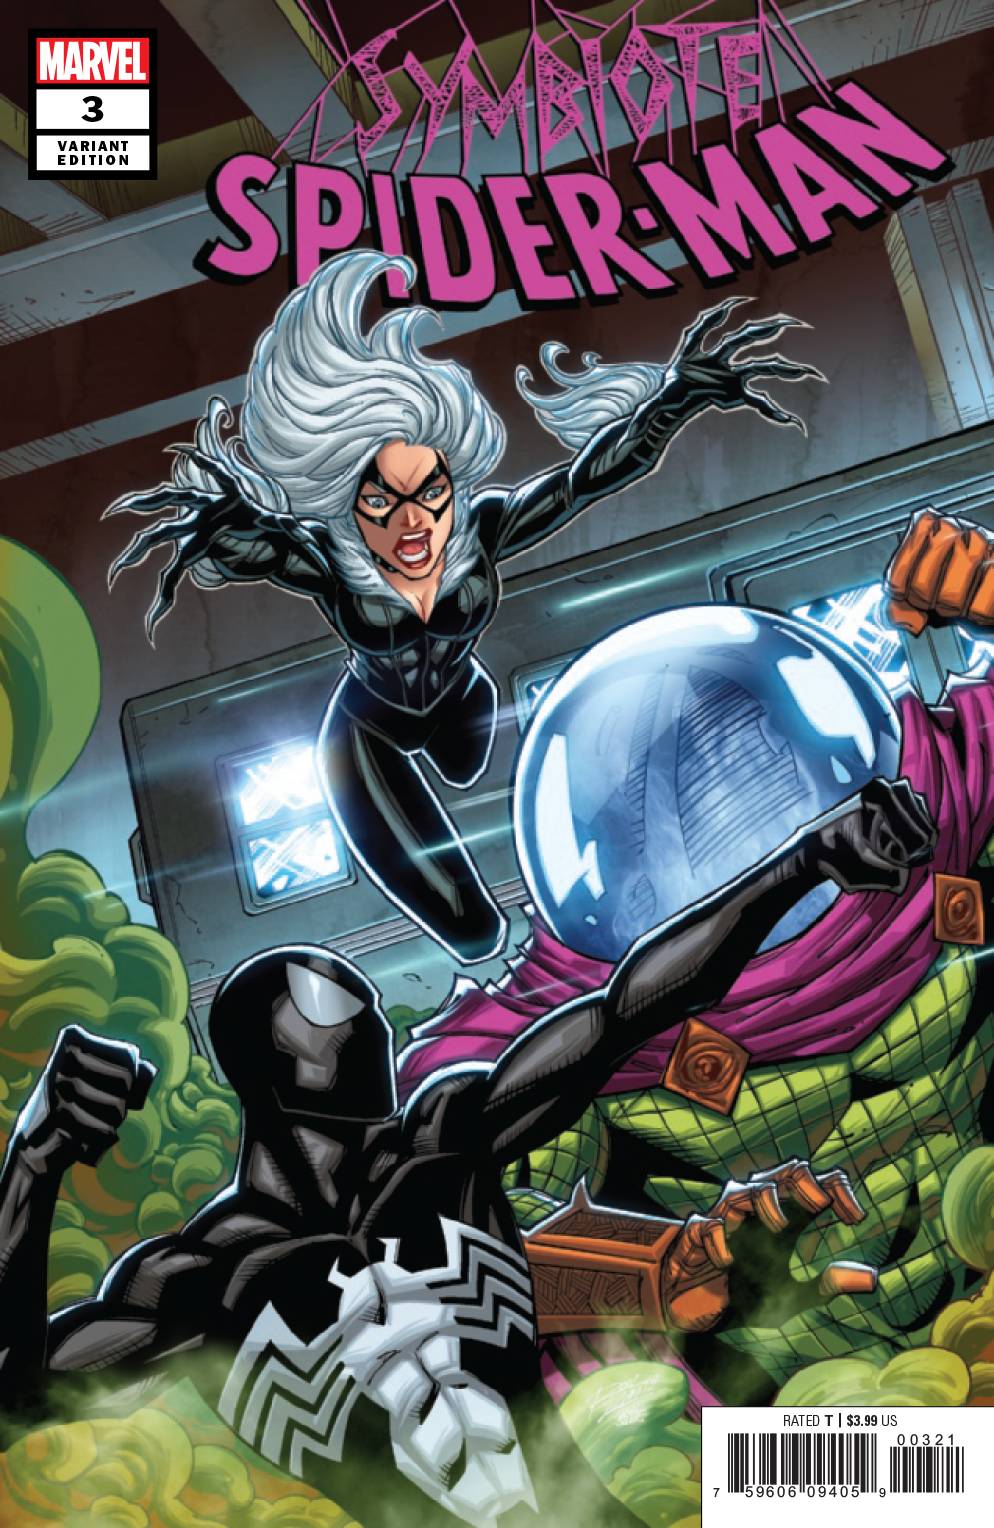 Symbiote Spider-Man #3 (of 5) Variant Edition (Lim) [2019]